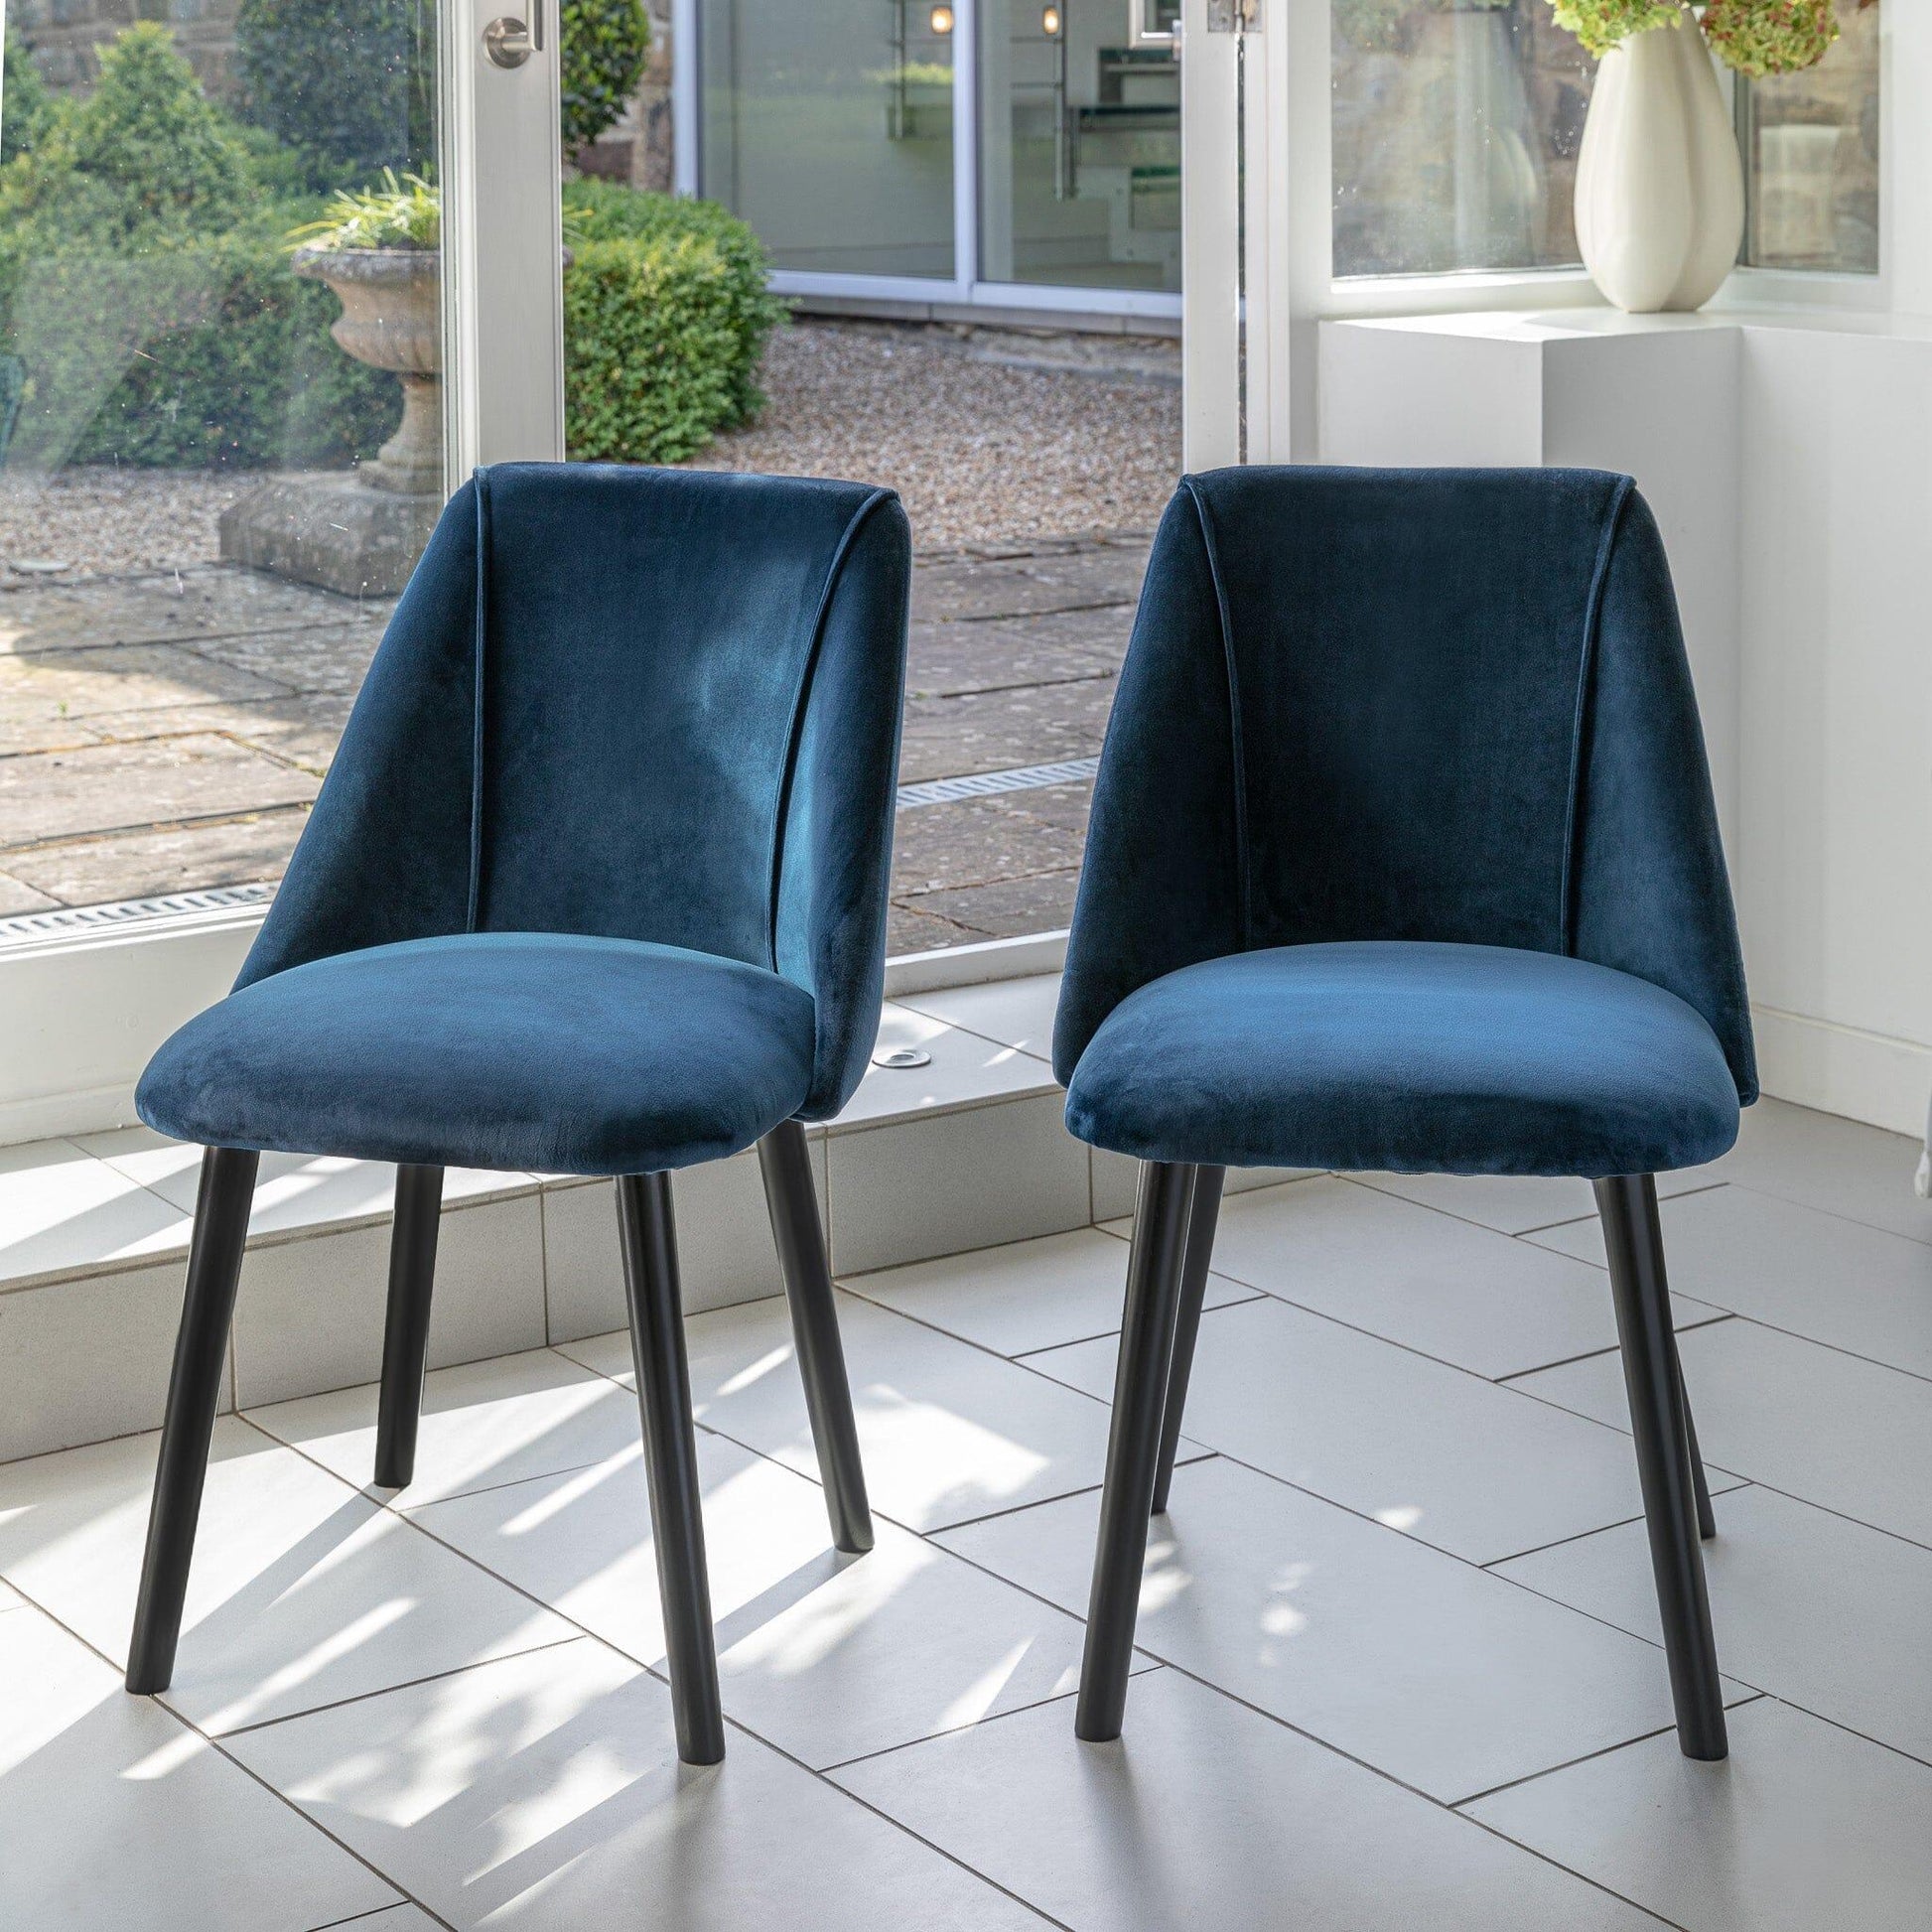 Freya dining chairs - set of 2 - blue velvet and black